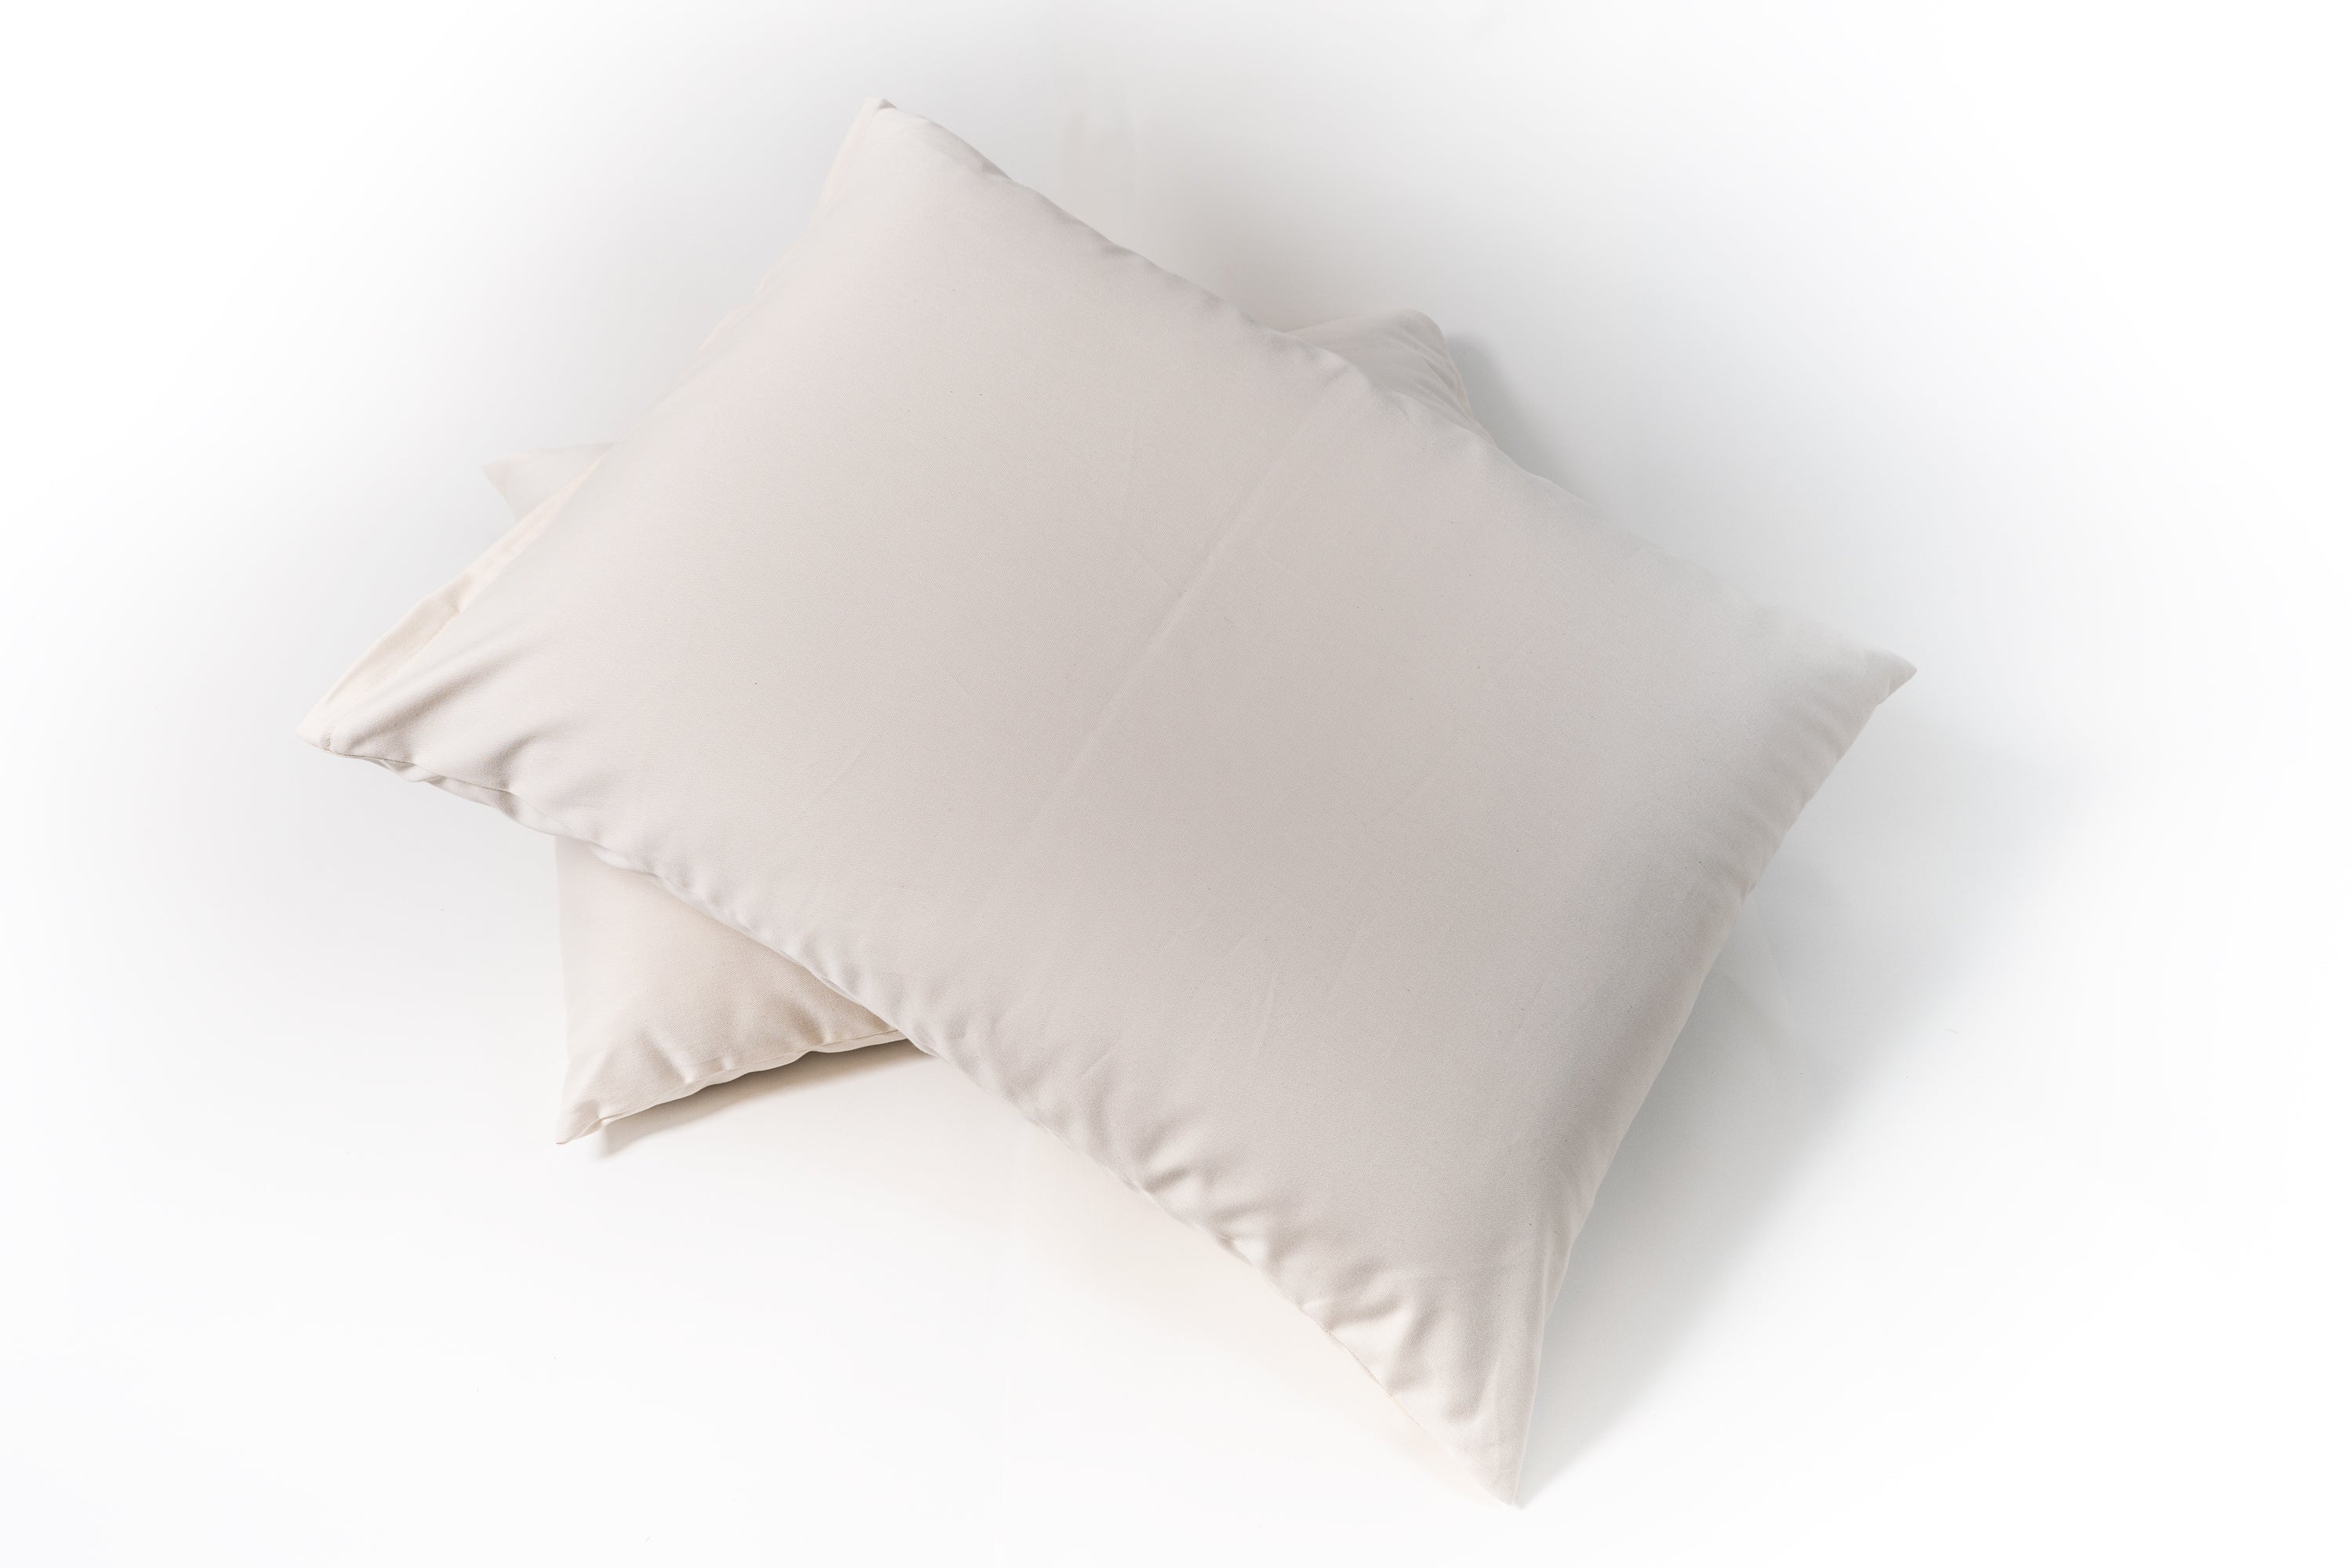 Organic Cotton Pillow by Sachi Organics